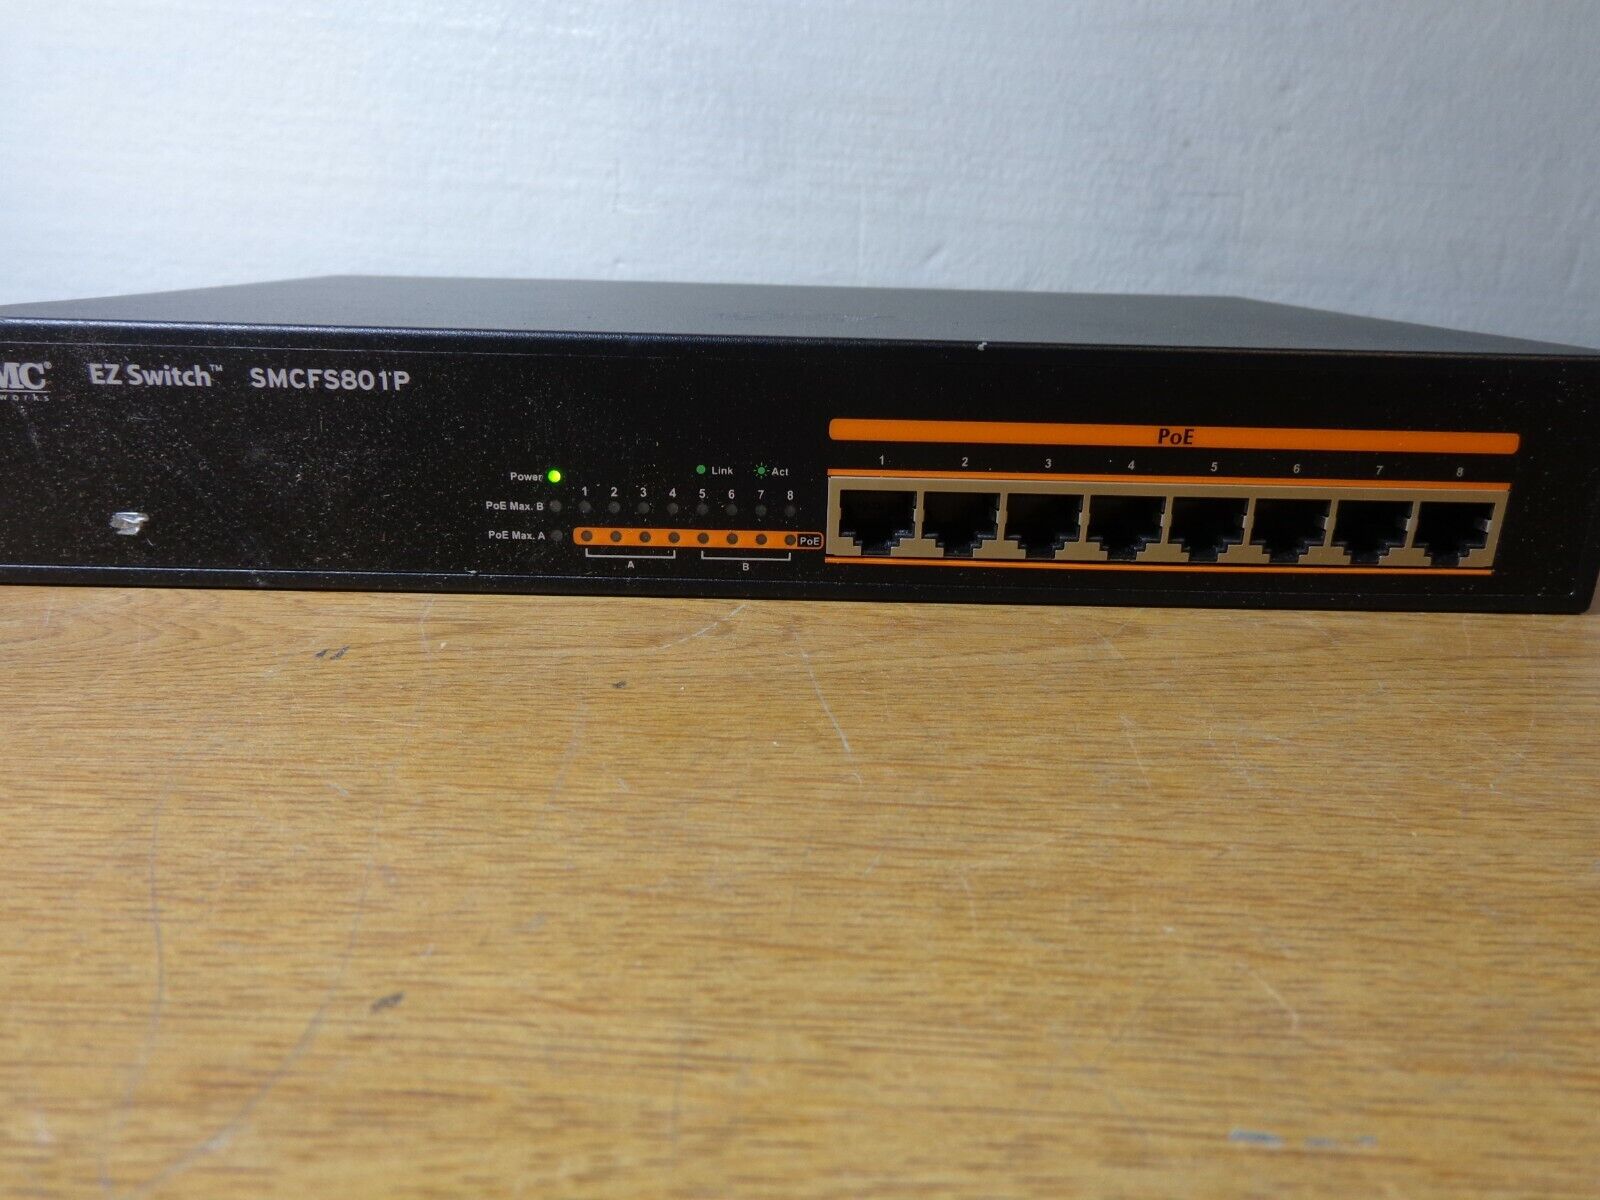 SMC Networks 8-port 10/100 Unmanaged PoE Switch SC-SMCFS801P